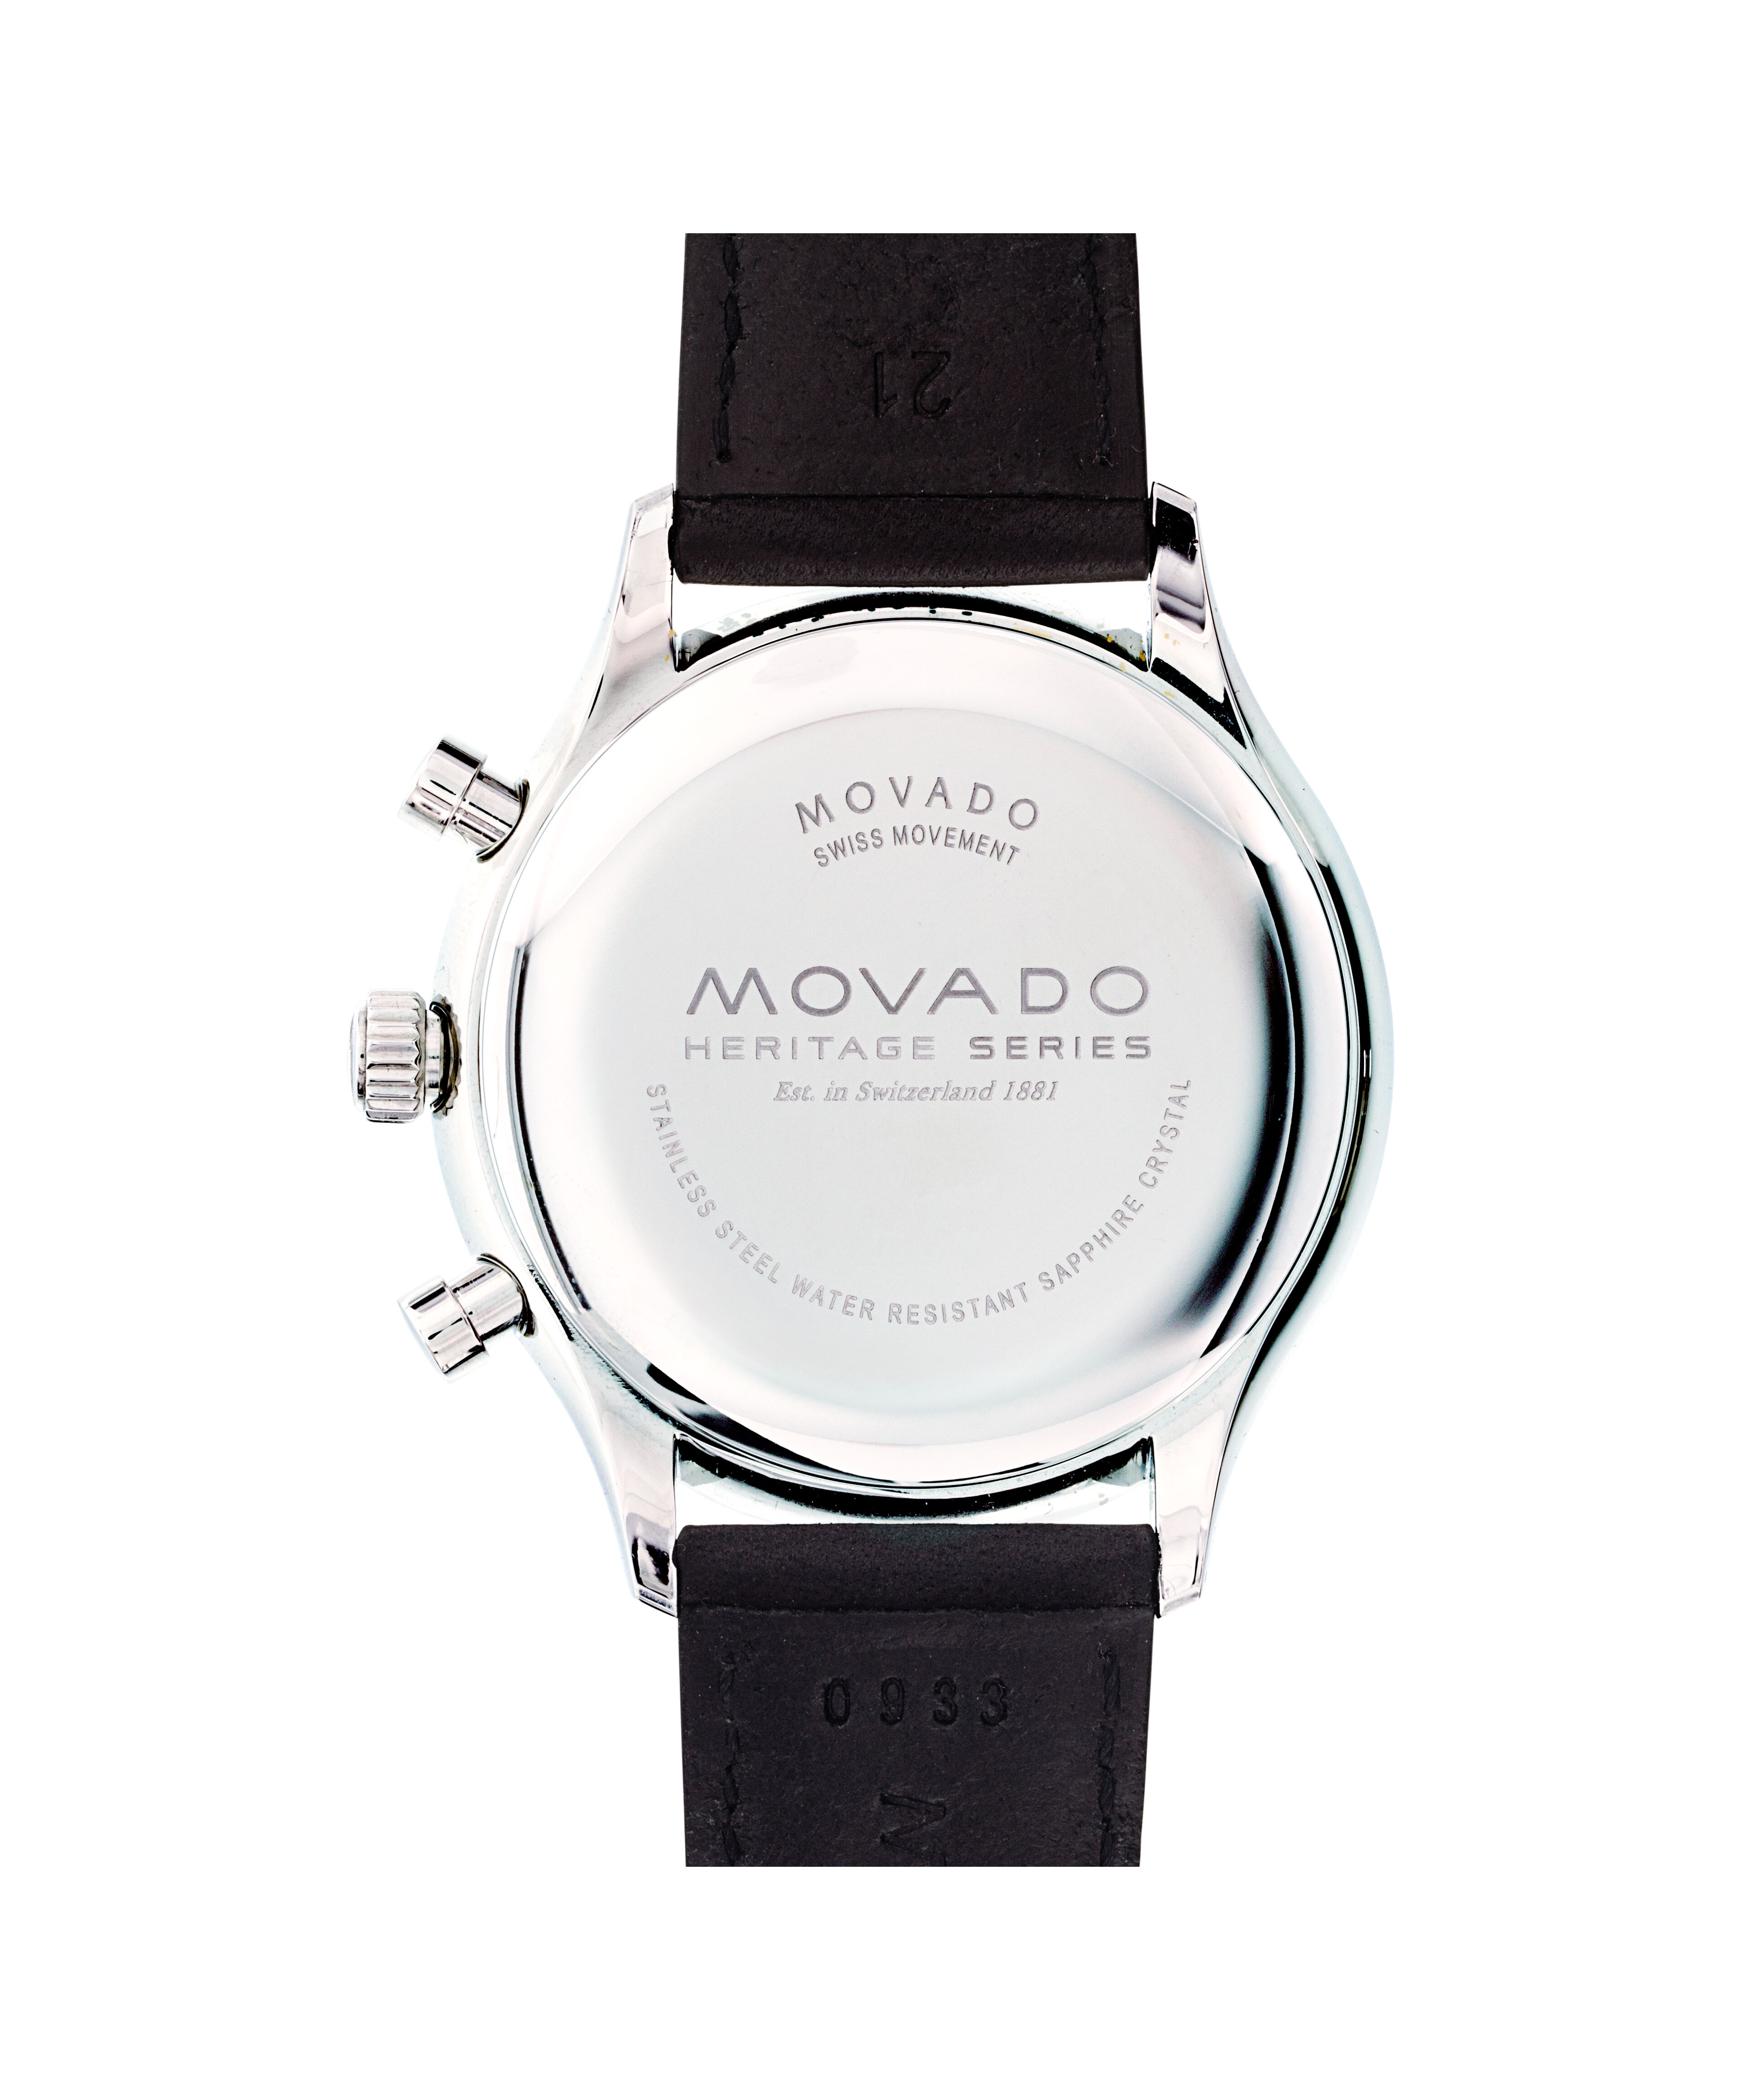 Movado - Elliptica / SWISS made / MEN`s / RARE vintage / SAPPHIRE crystal / ORIGINAL bracelet